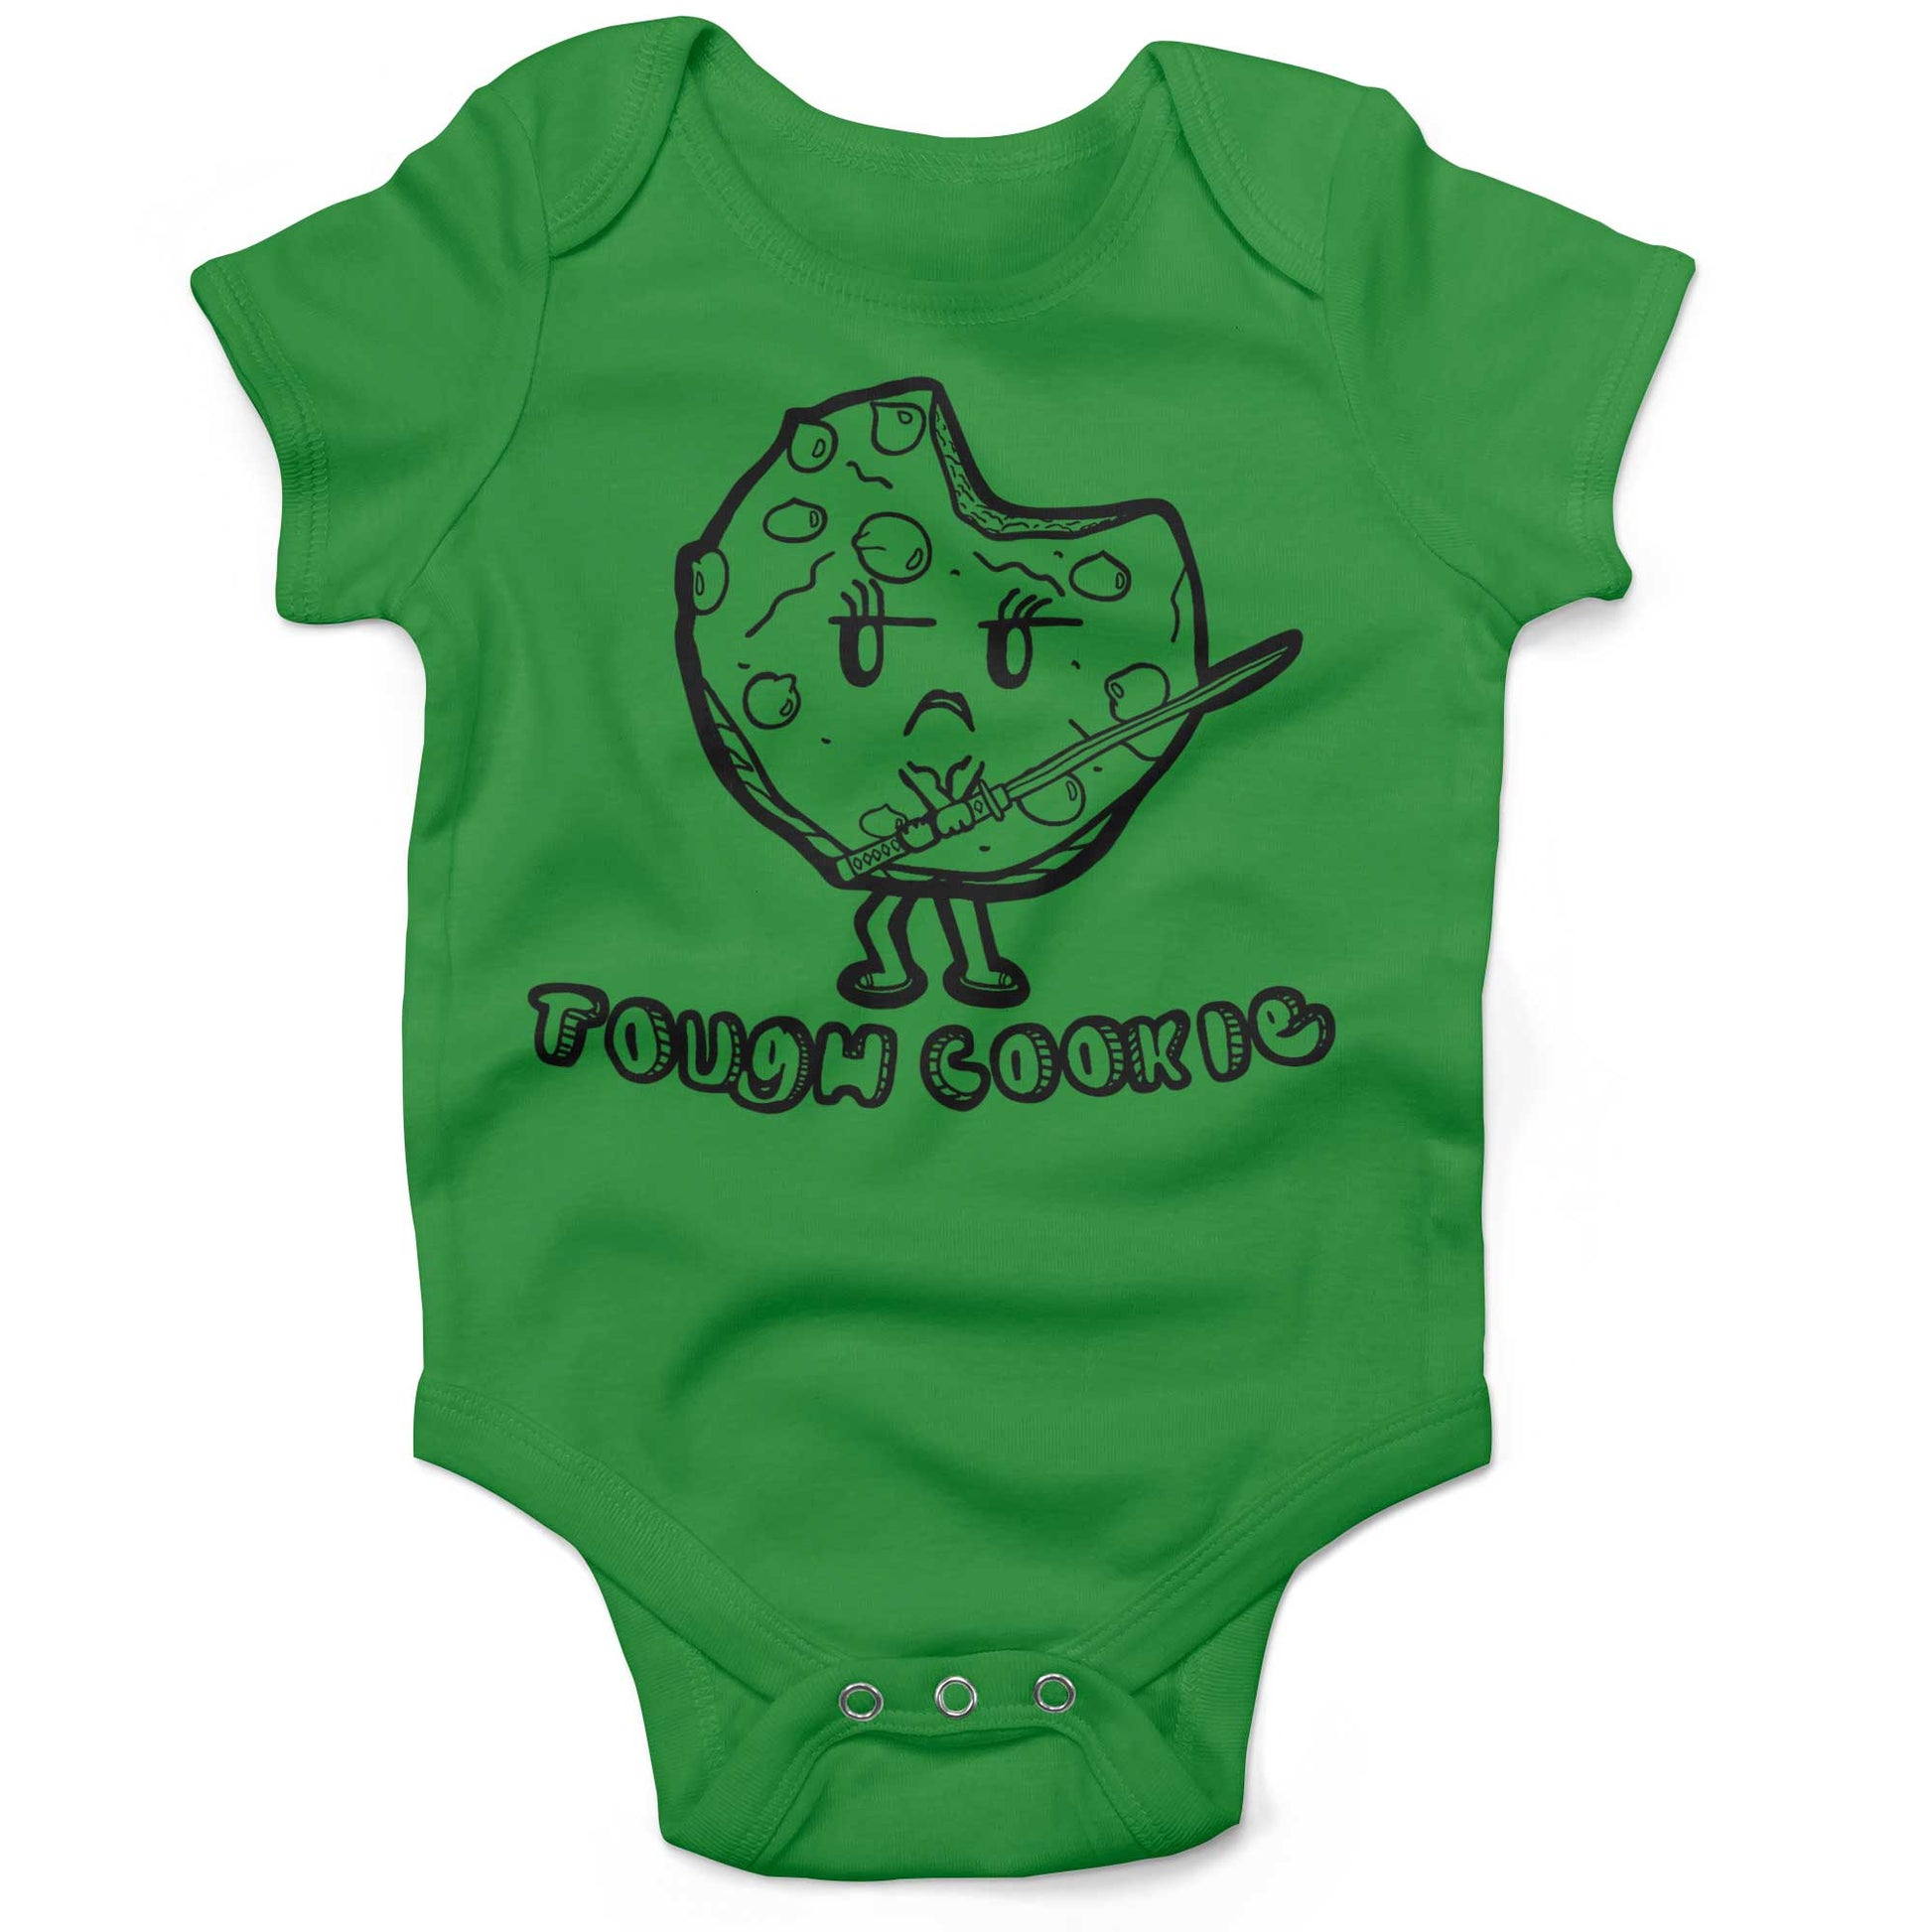 Tough Cookie Infant Bodysuit or Raglan Tee-Grass Green-3-6 months